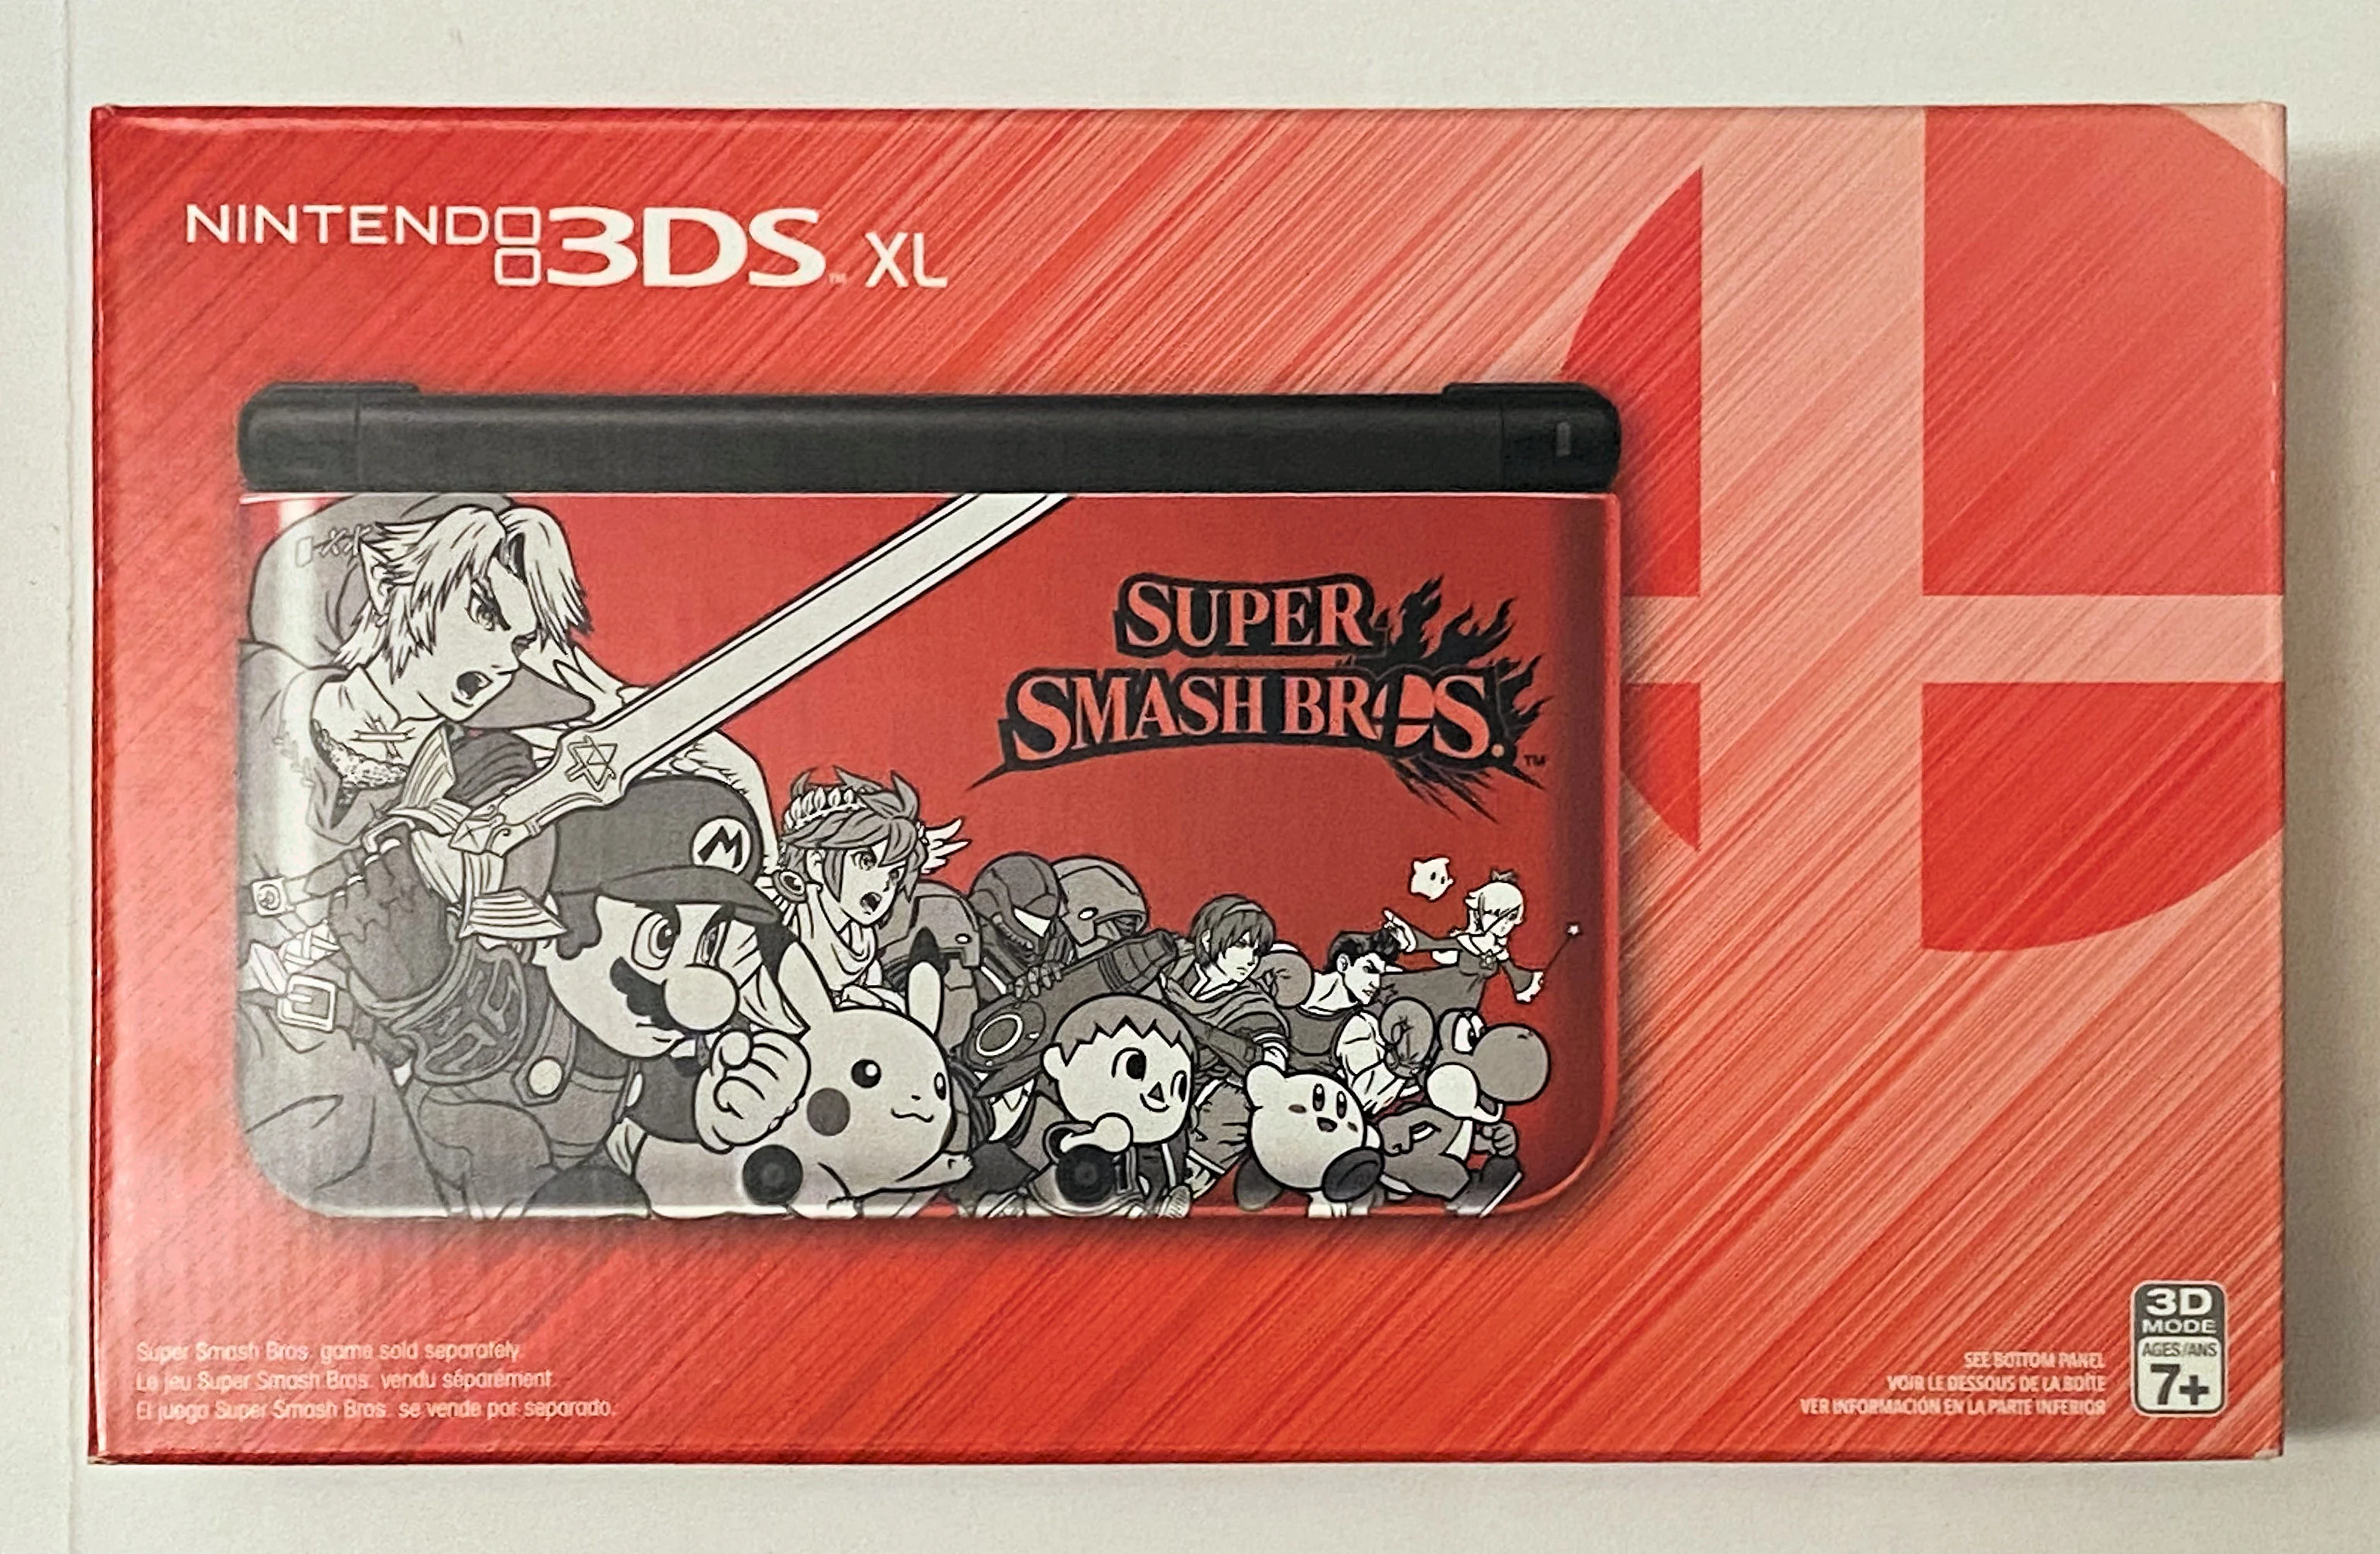  Nintendo 3DS XL Super Smash Bros Red Console [NA]